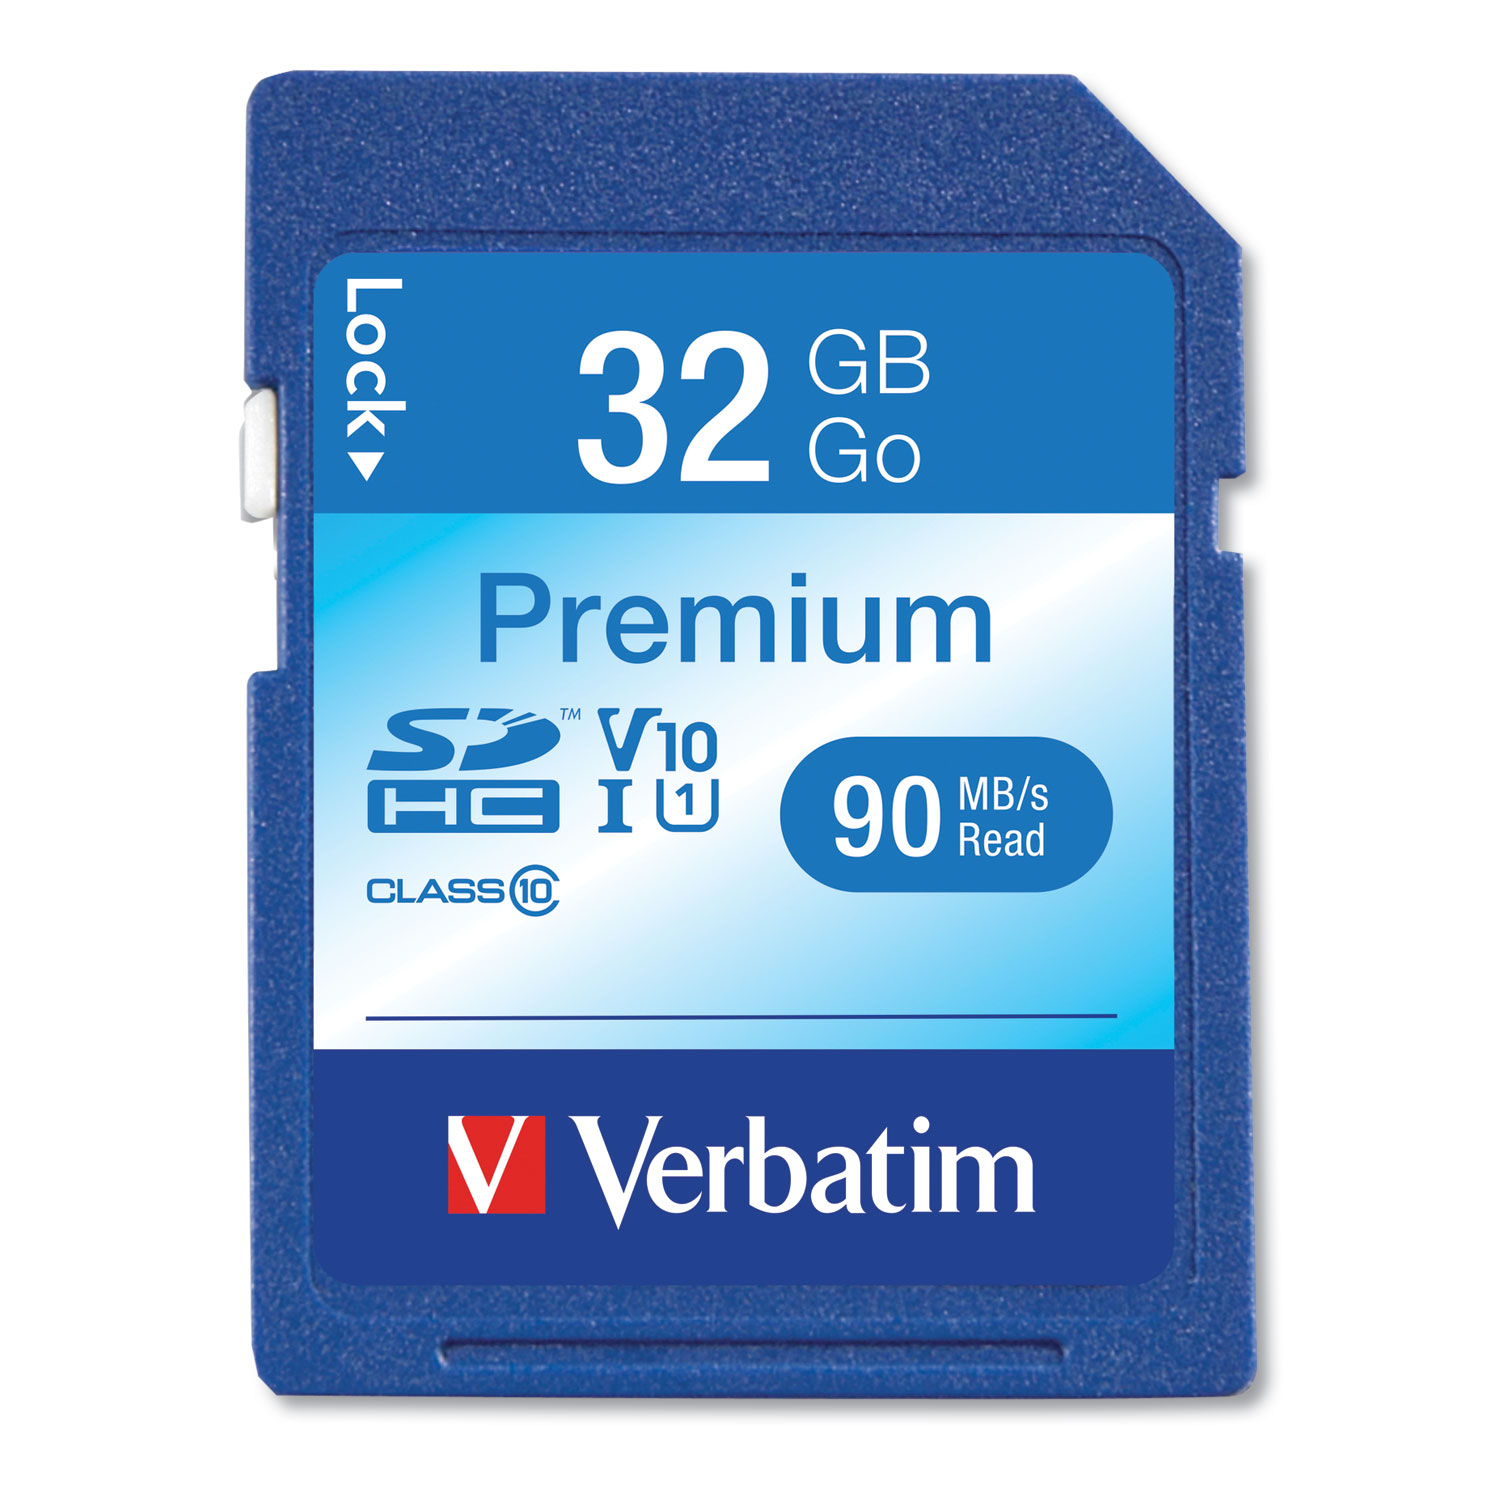  Verbatim 96871 32GB Premium SDHC Memory Card, UHS-I V10 U1 Class 10, Up to 90MB/s Read Speed (VER96871) 